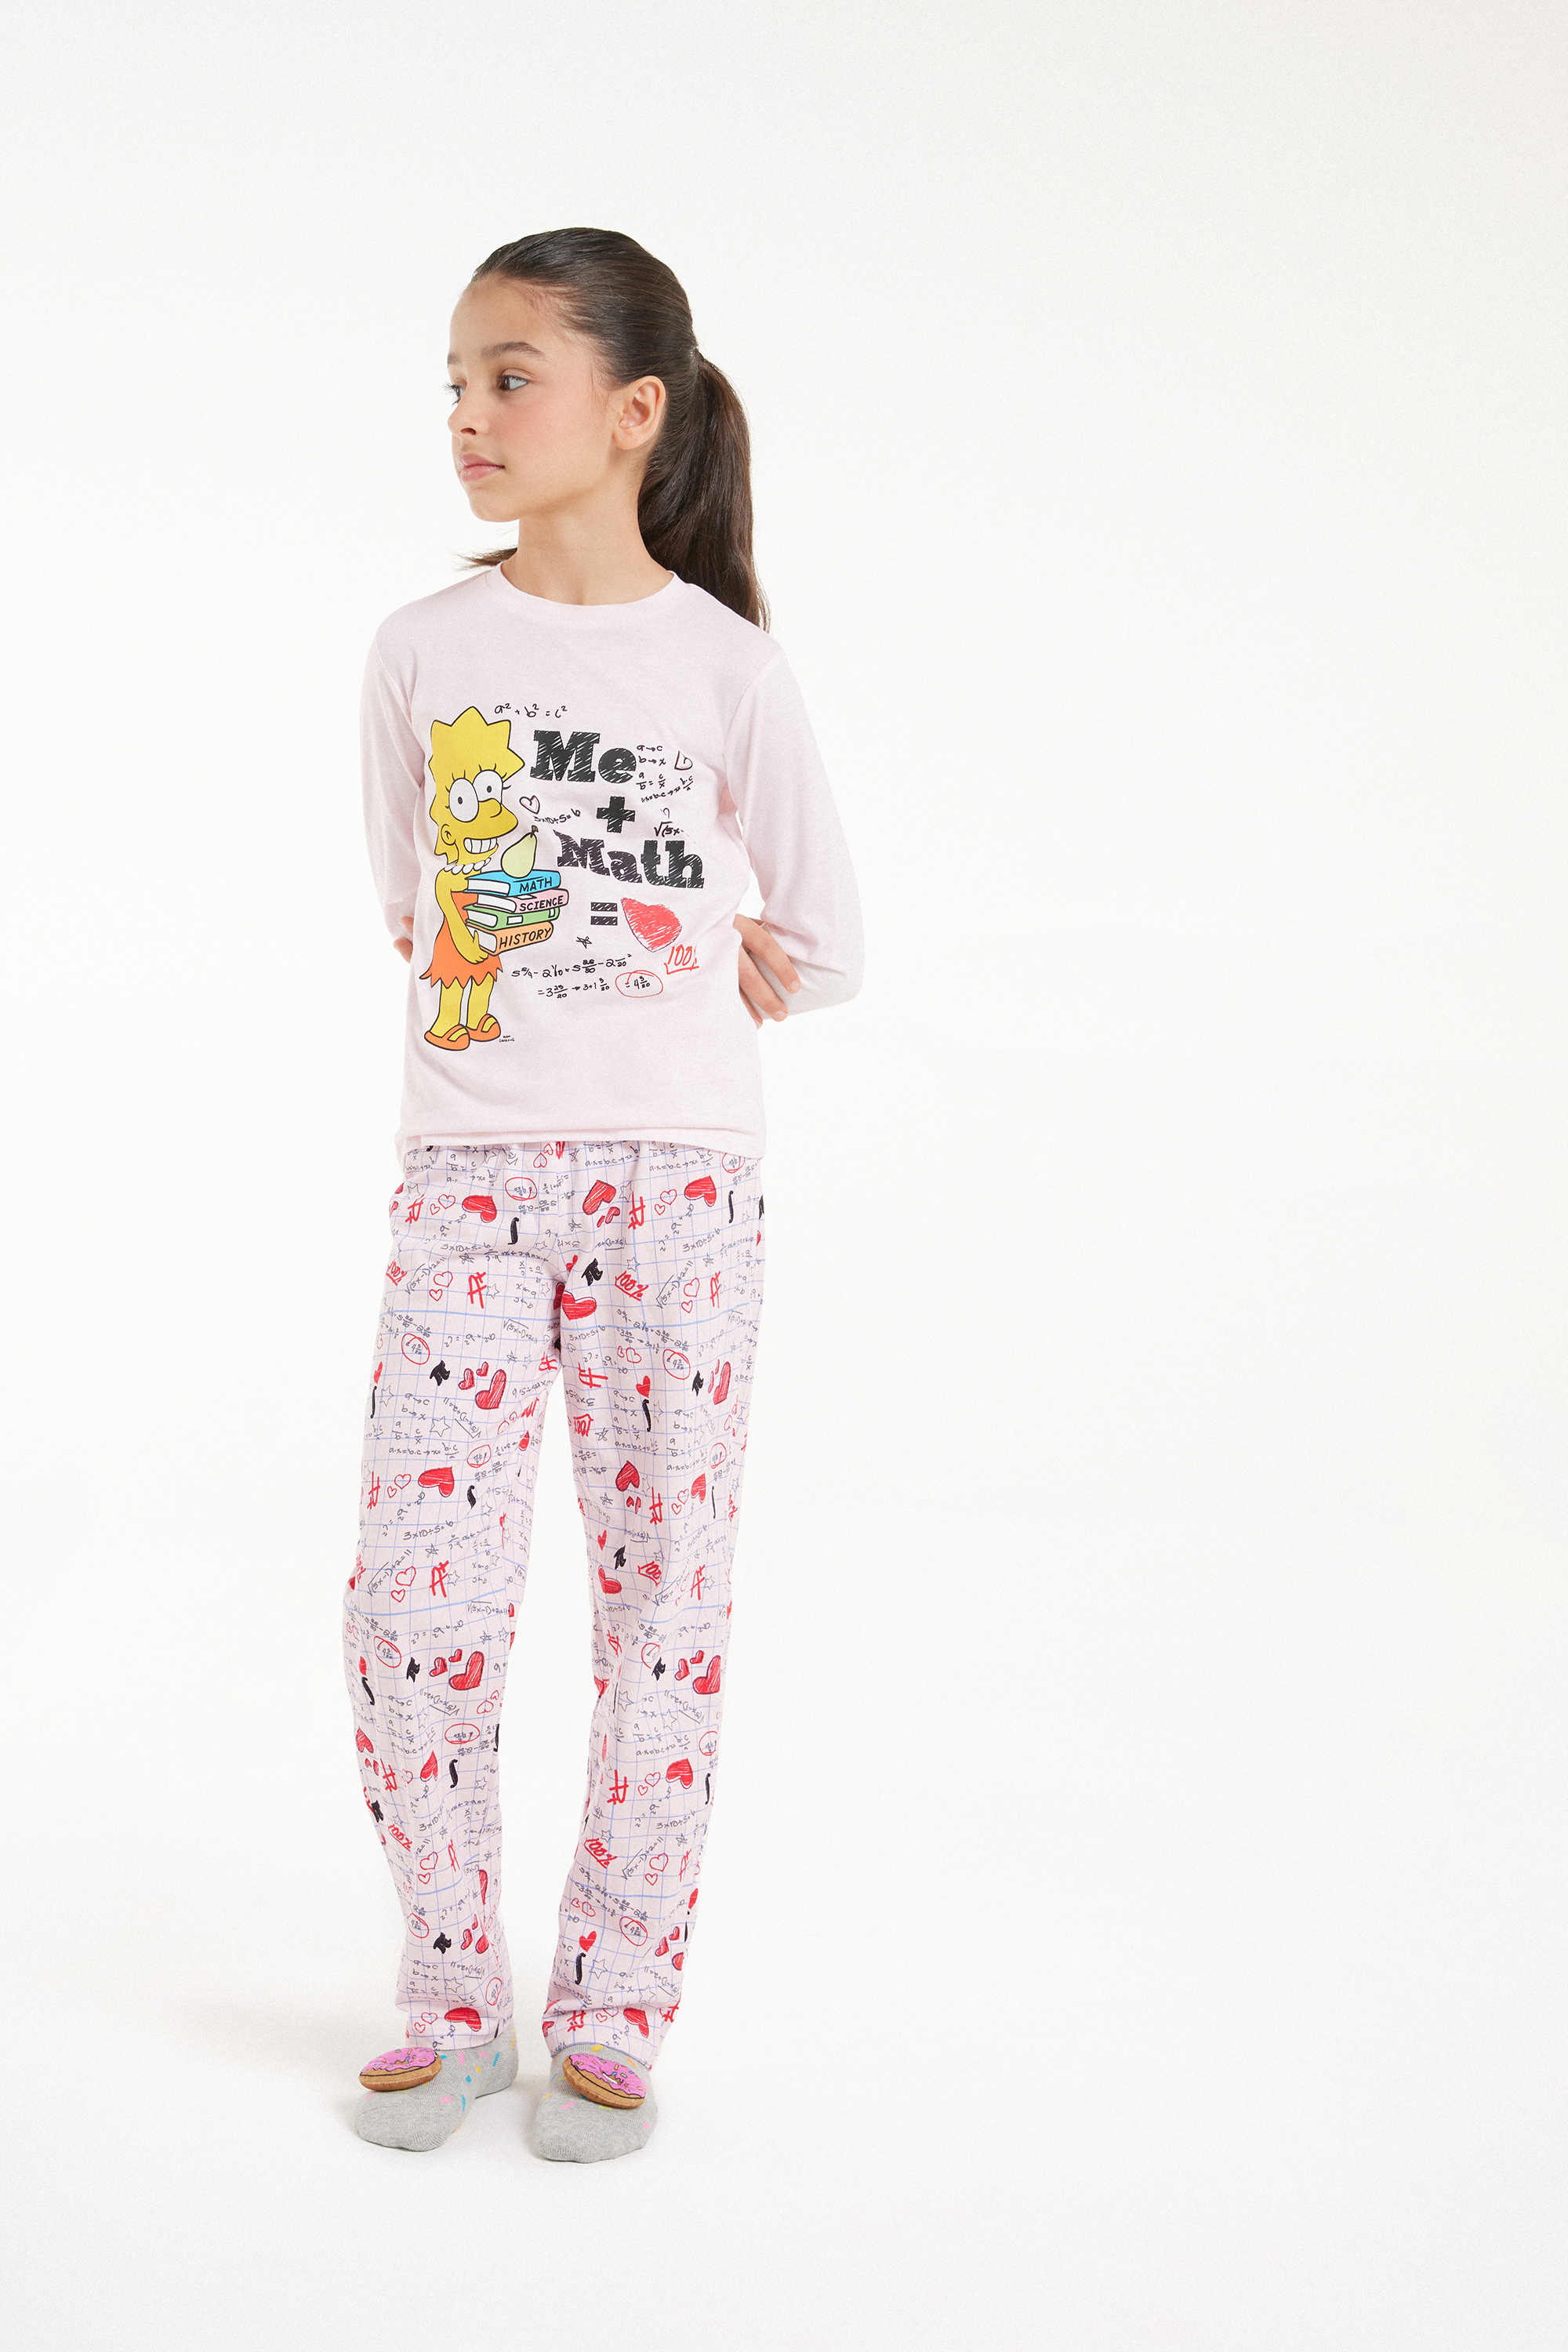 Pyjama Long Imprimé The Simpsons